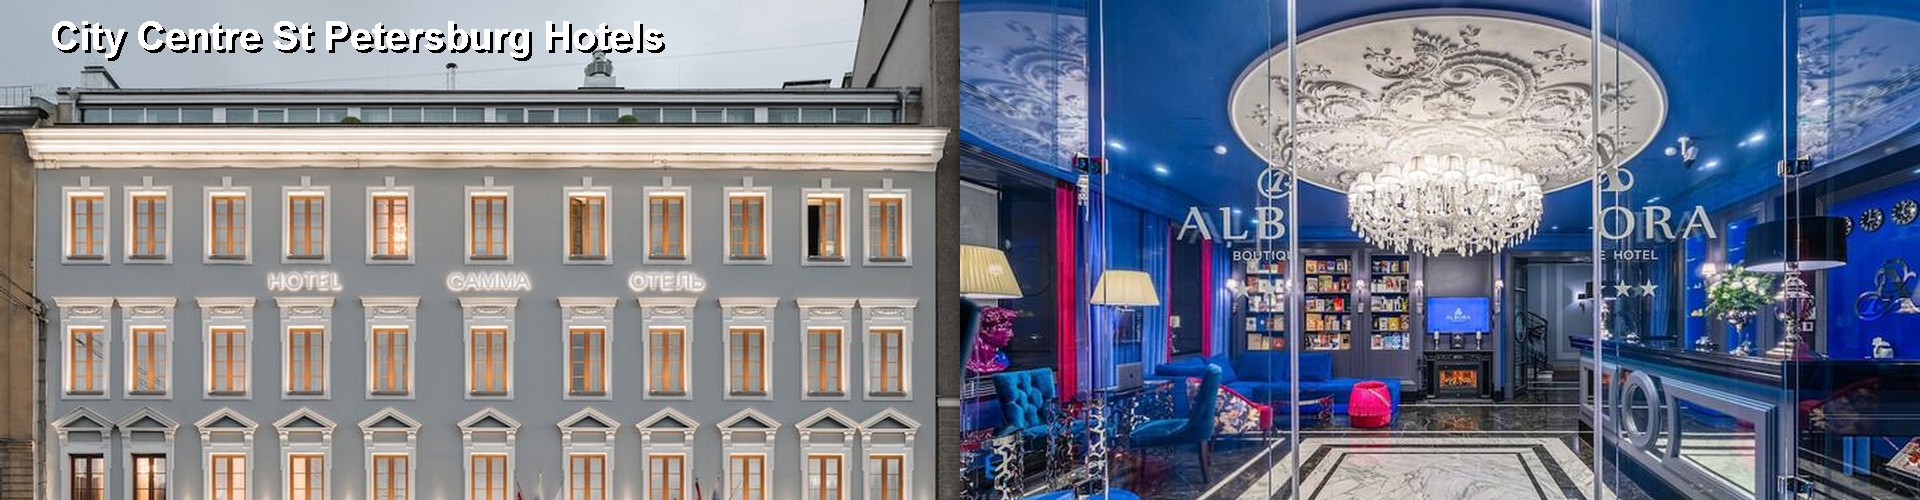 5 Best Hotels near City Centre St Petersburg